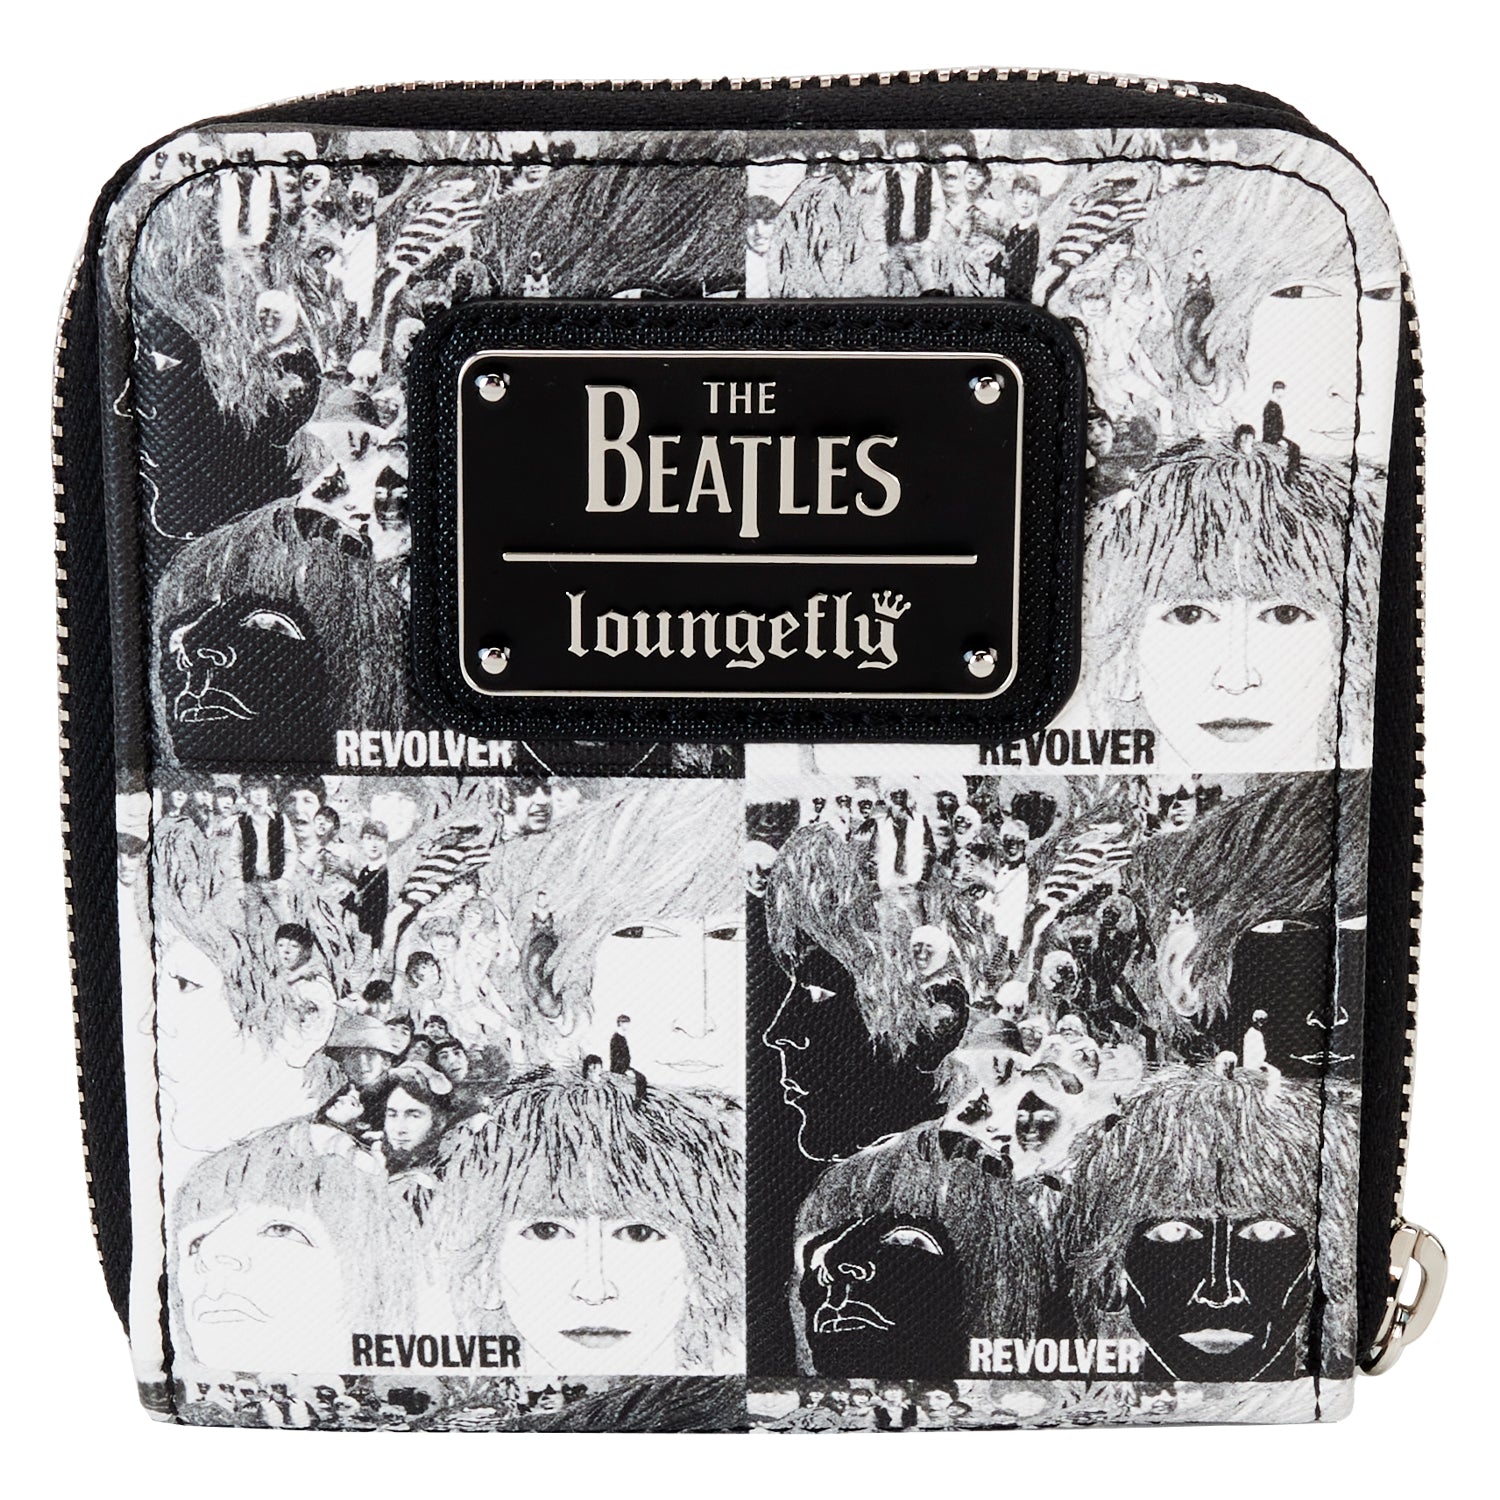 Loungefly x The Beatles Revolver Album Wallet